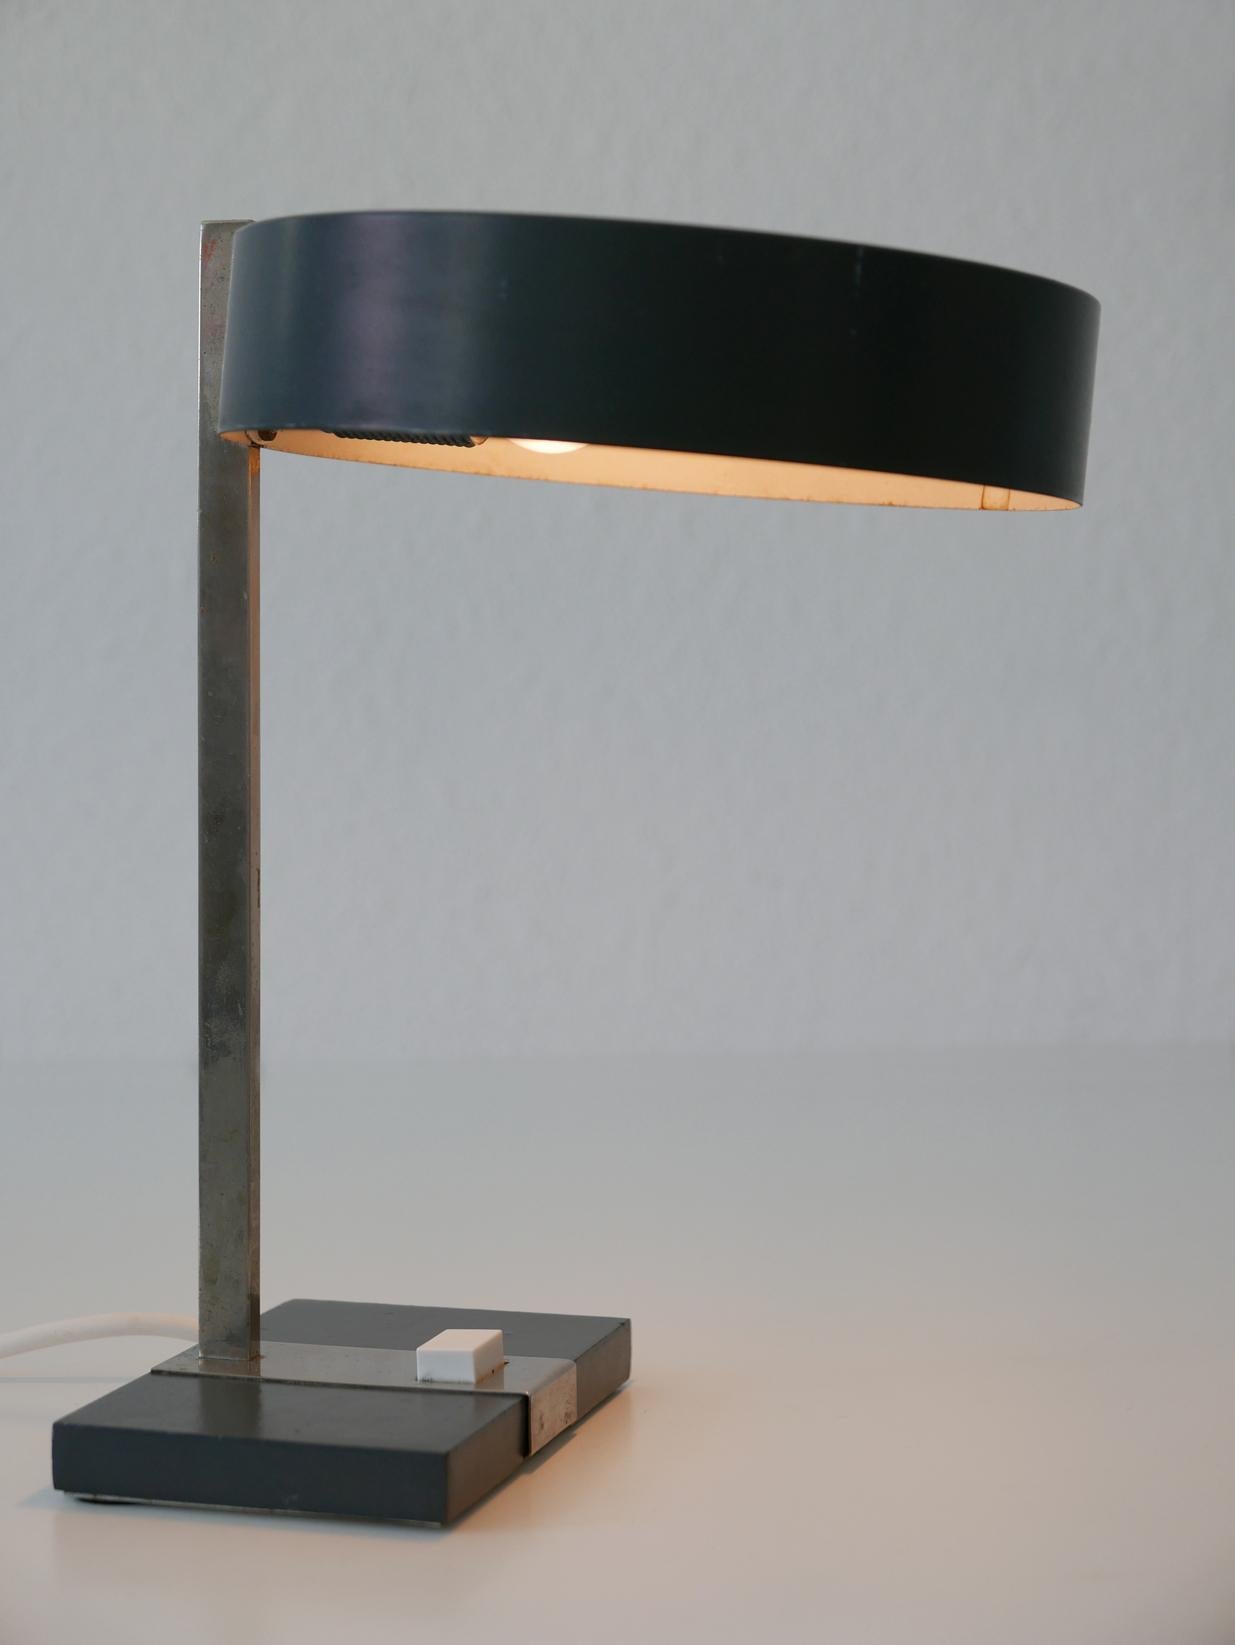 Elegant Mid-Century Modern Table Lamp or Desk Light by Hillebrand, 1960s Germany For Sale 2